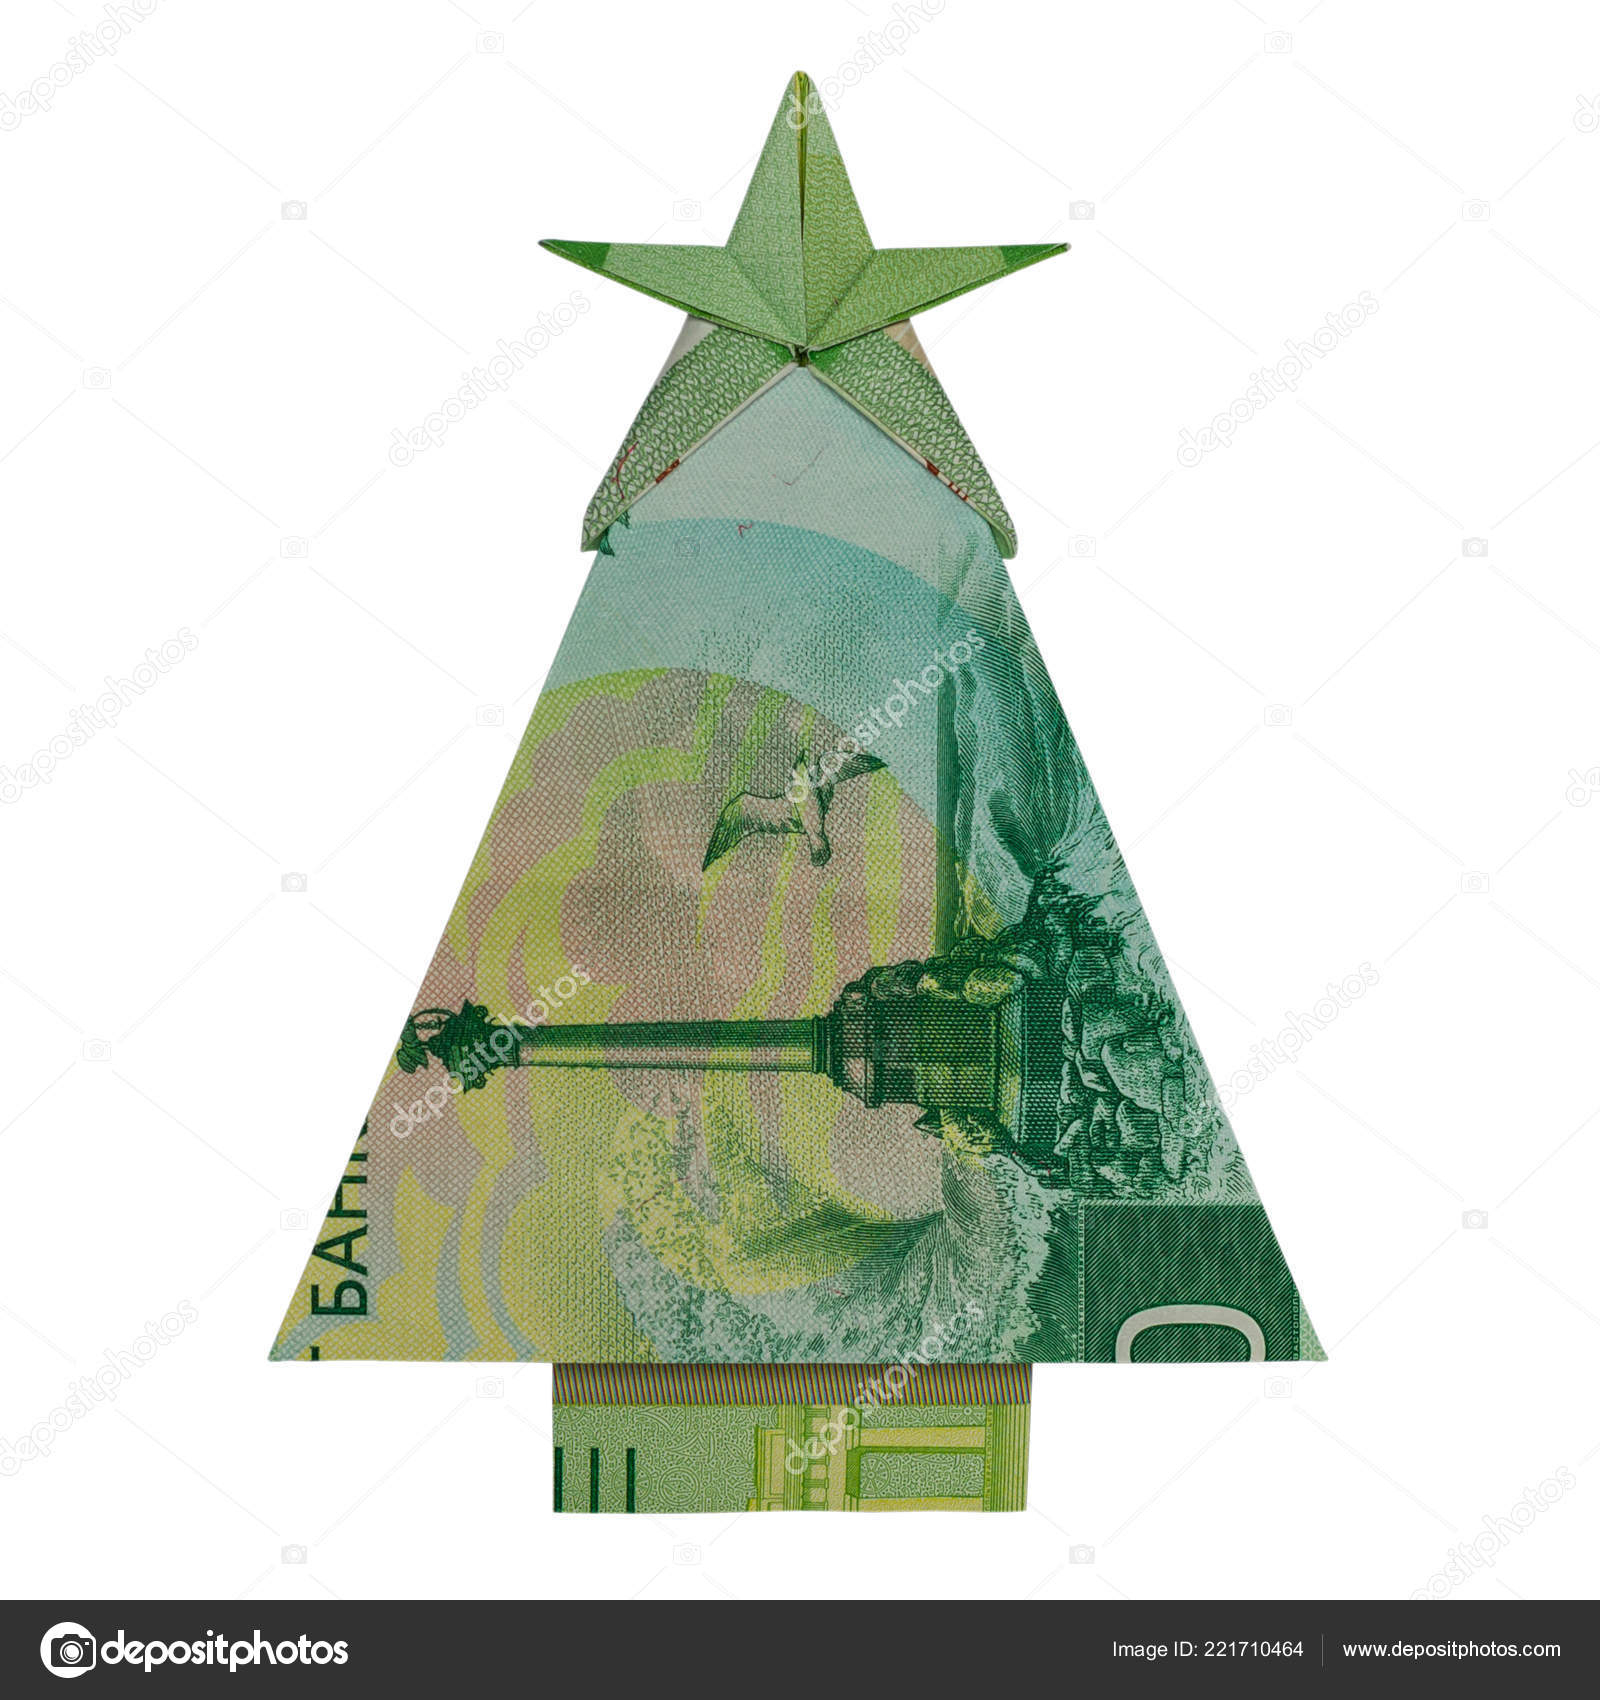 Origami Money Christmas Tree Money Origami Christmas Tree Folded 200 Russian Rubles Bill Isolated